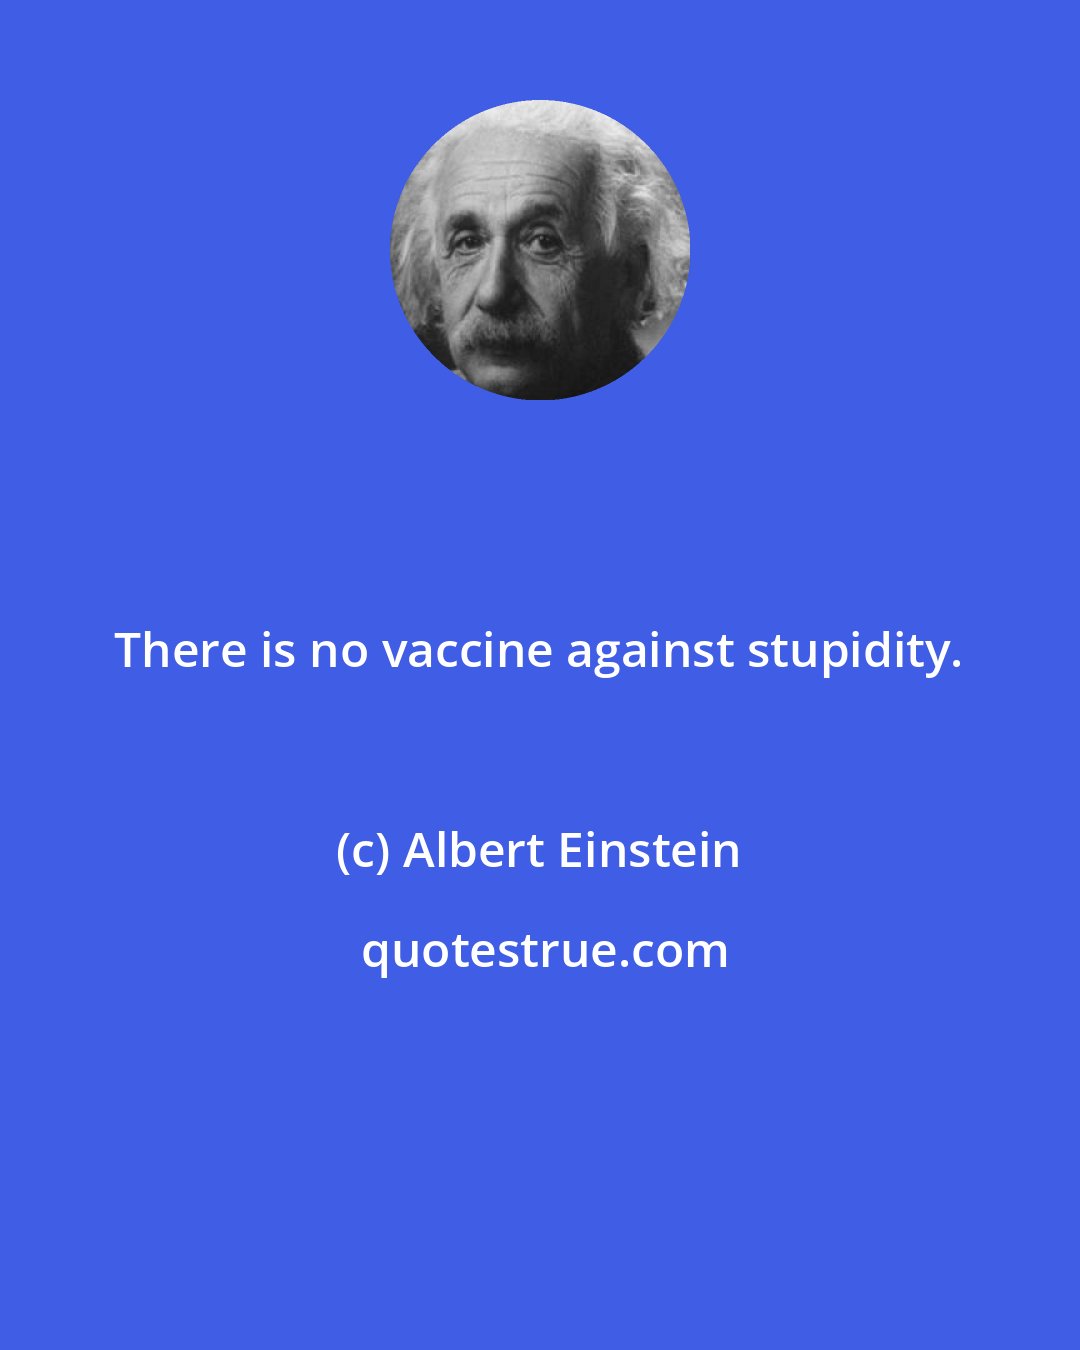 Albert Einstein: There is no vaccine against stupidity.